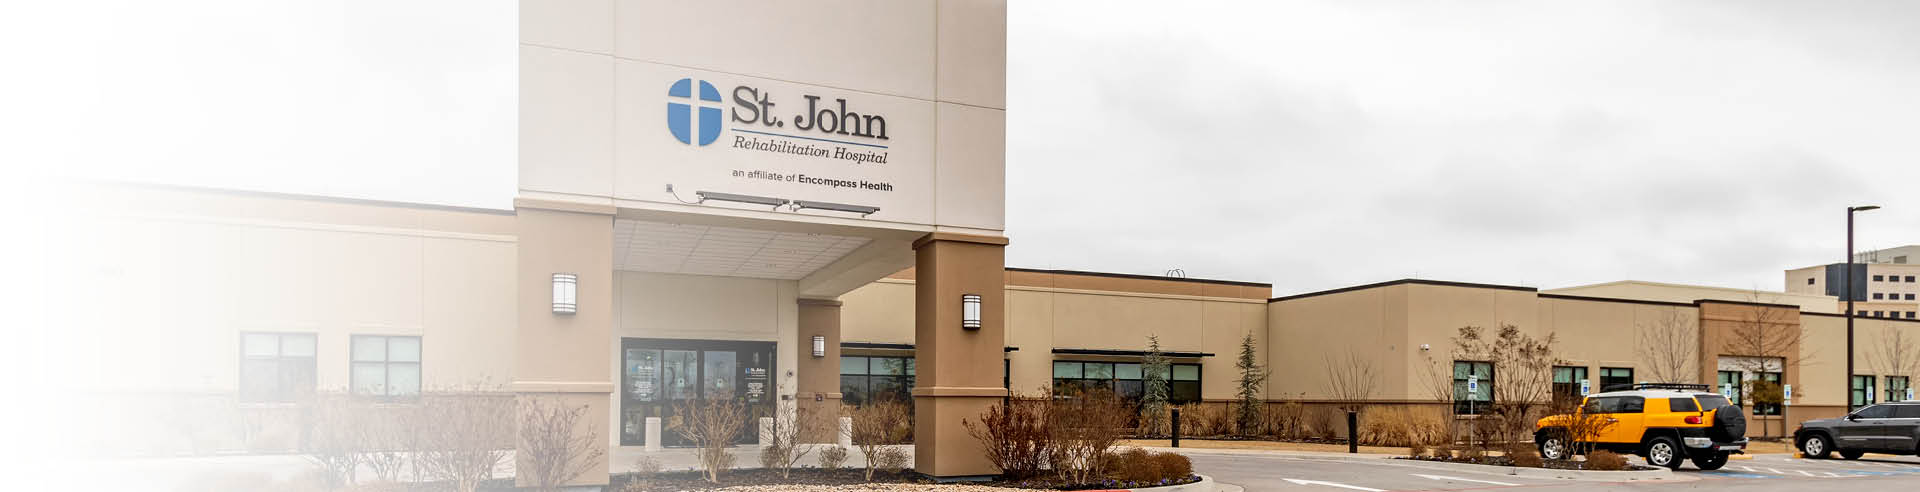 St. John Rehabilitation Hospital exterior image